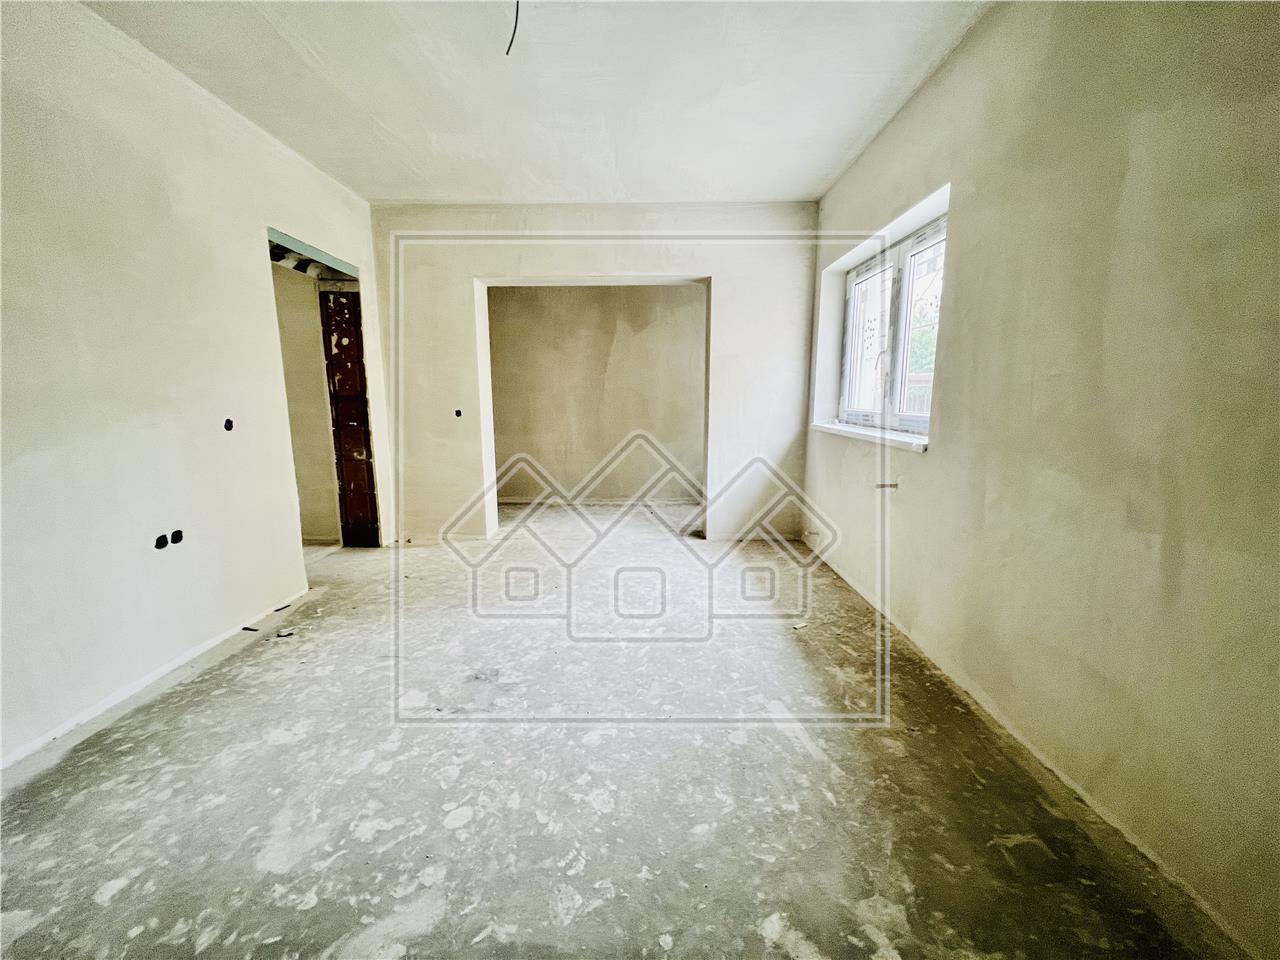 3-Zimmer-Wohnung zu verkaufen in Sibiu - Selimbar, Triajului - Hochpar